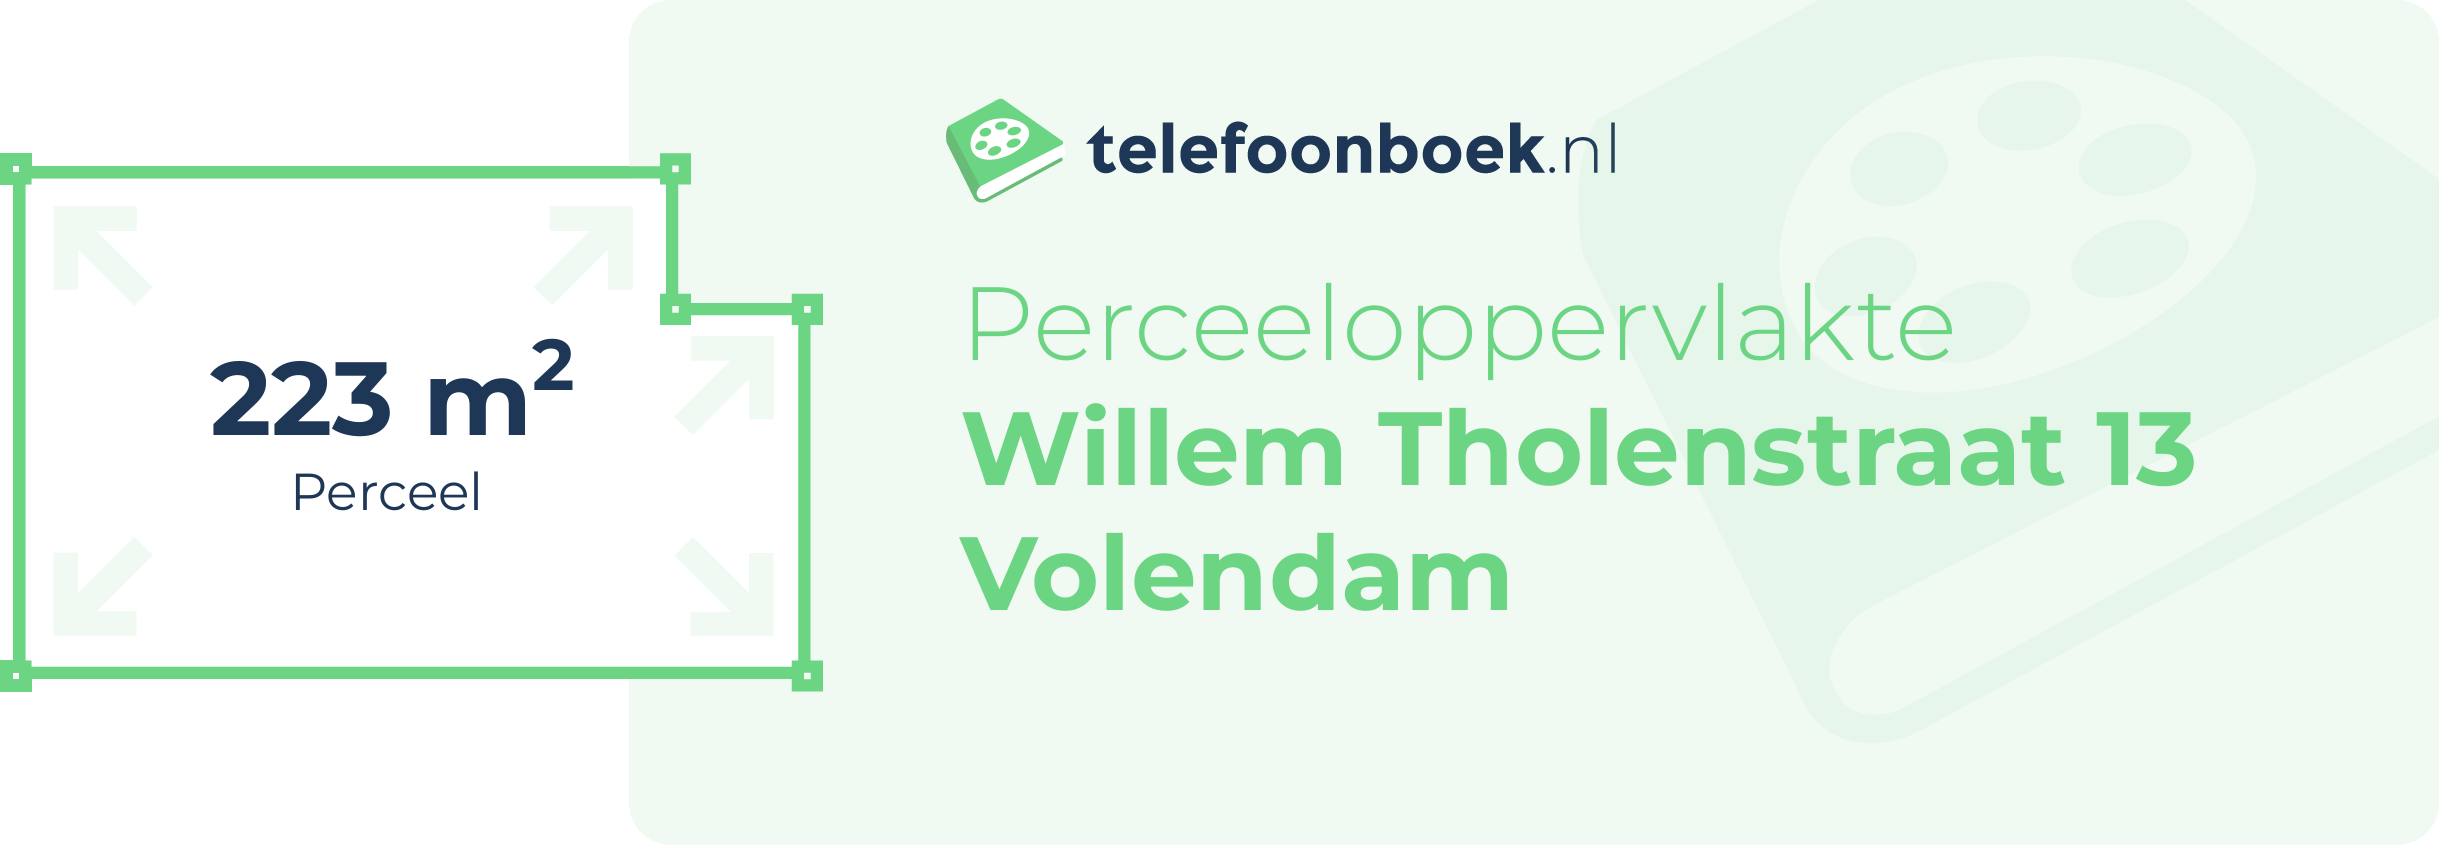 Perceeloppervlakte Willem Tholenstraat 13 Volendam